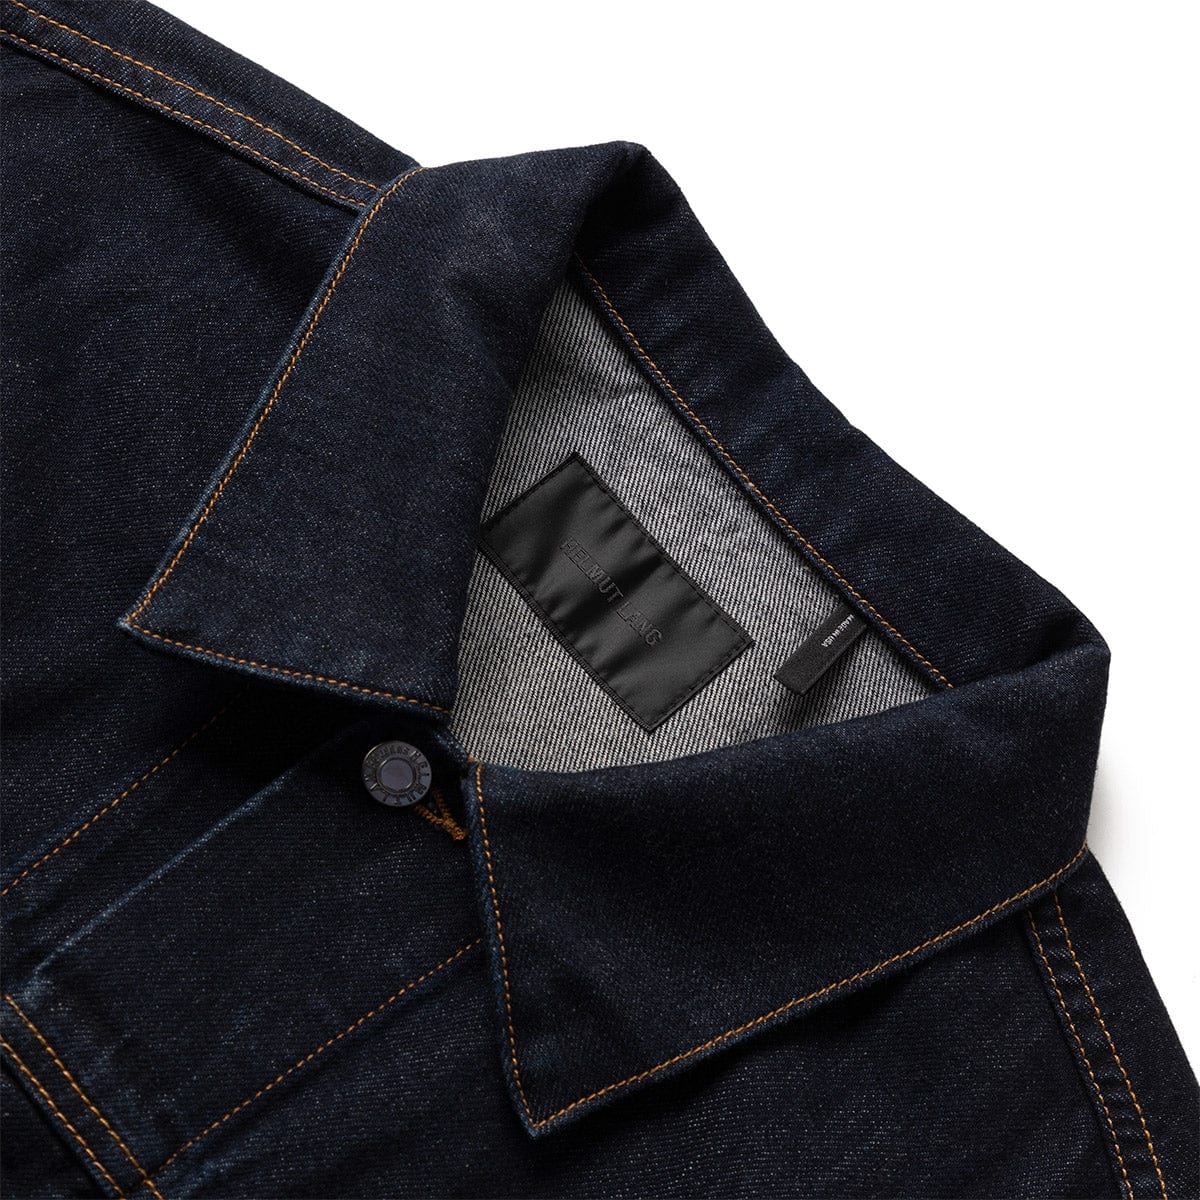 Helmut Lang Jeans: A Timeless Staple